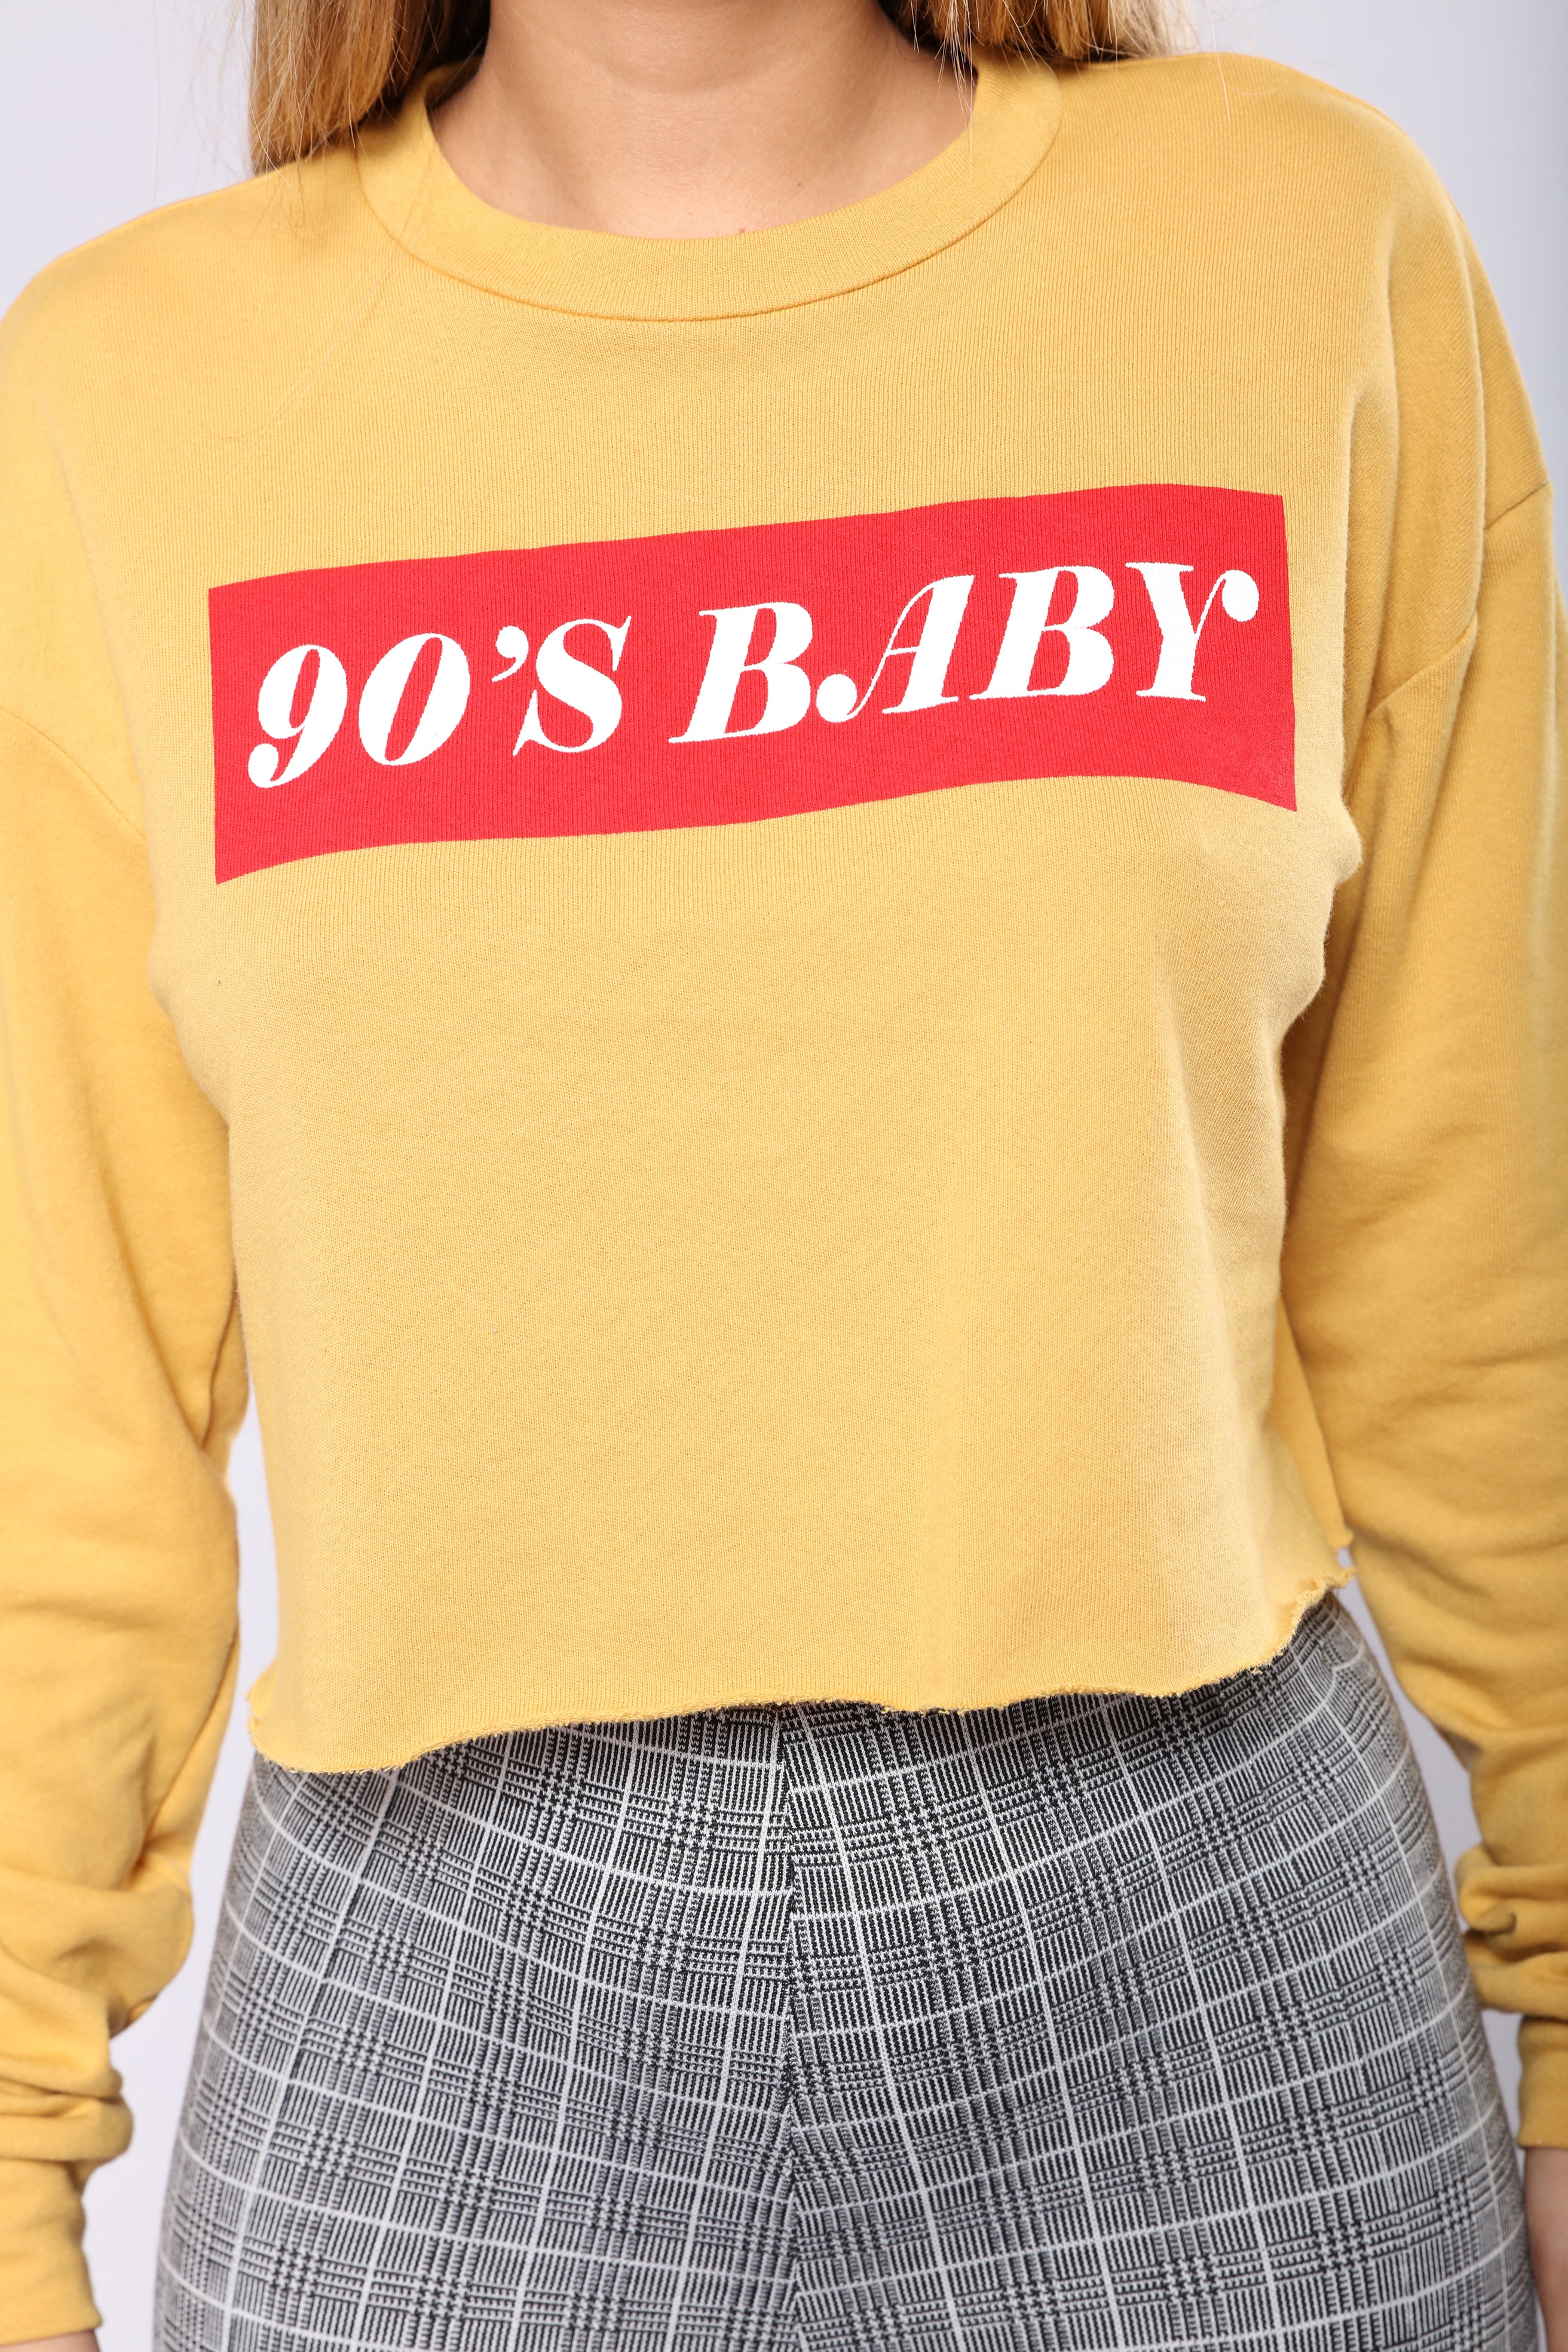 90s baby sweatshirt